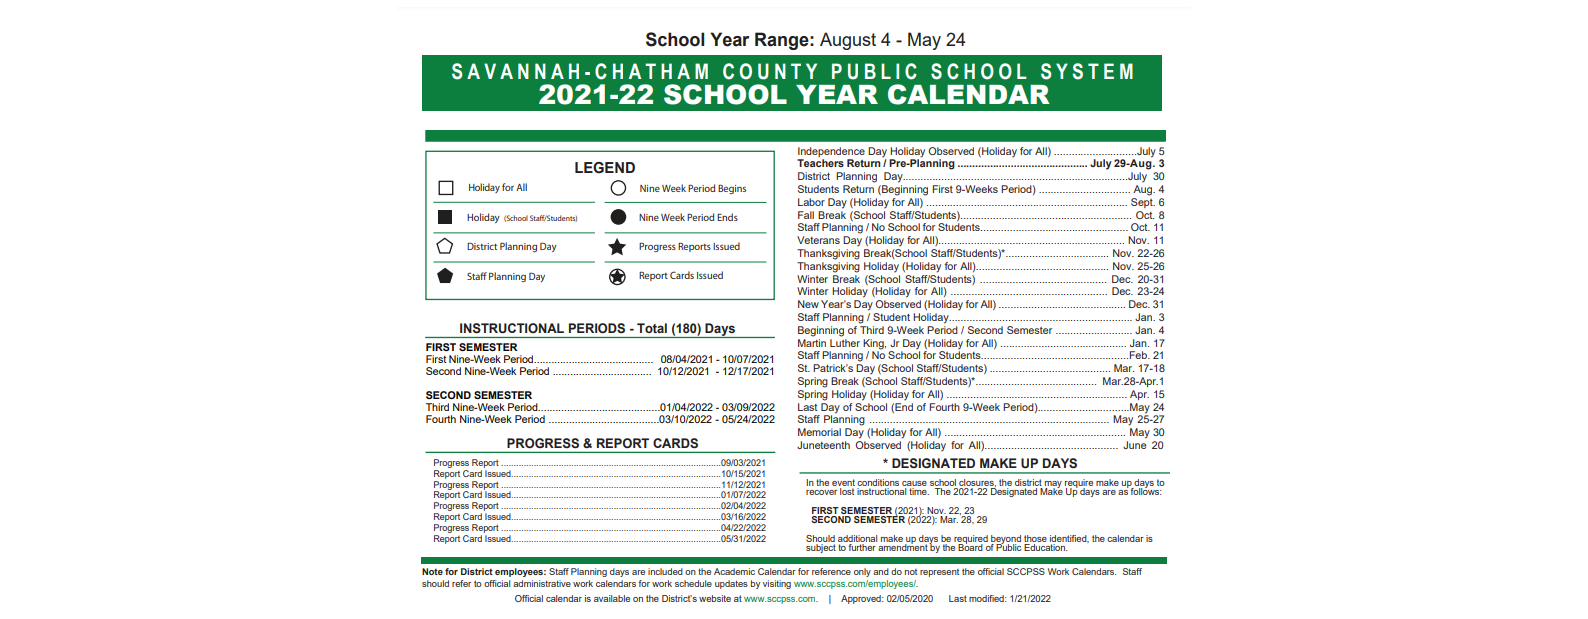 District School Academic Calendar Key for Derenne Middle School